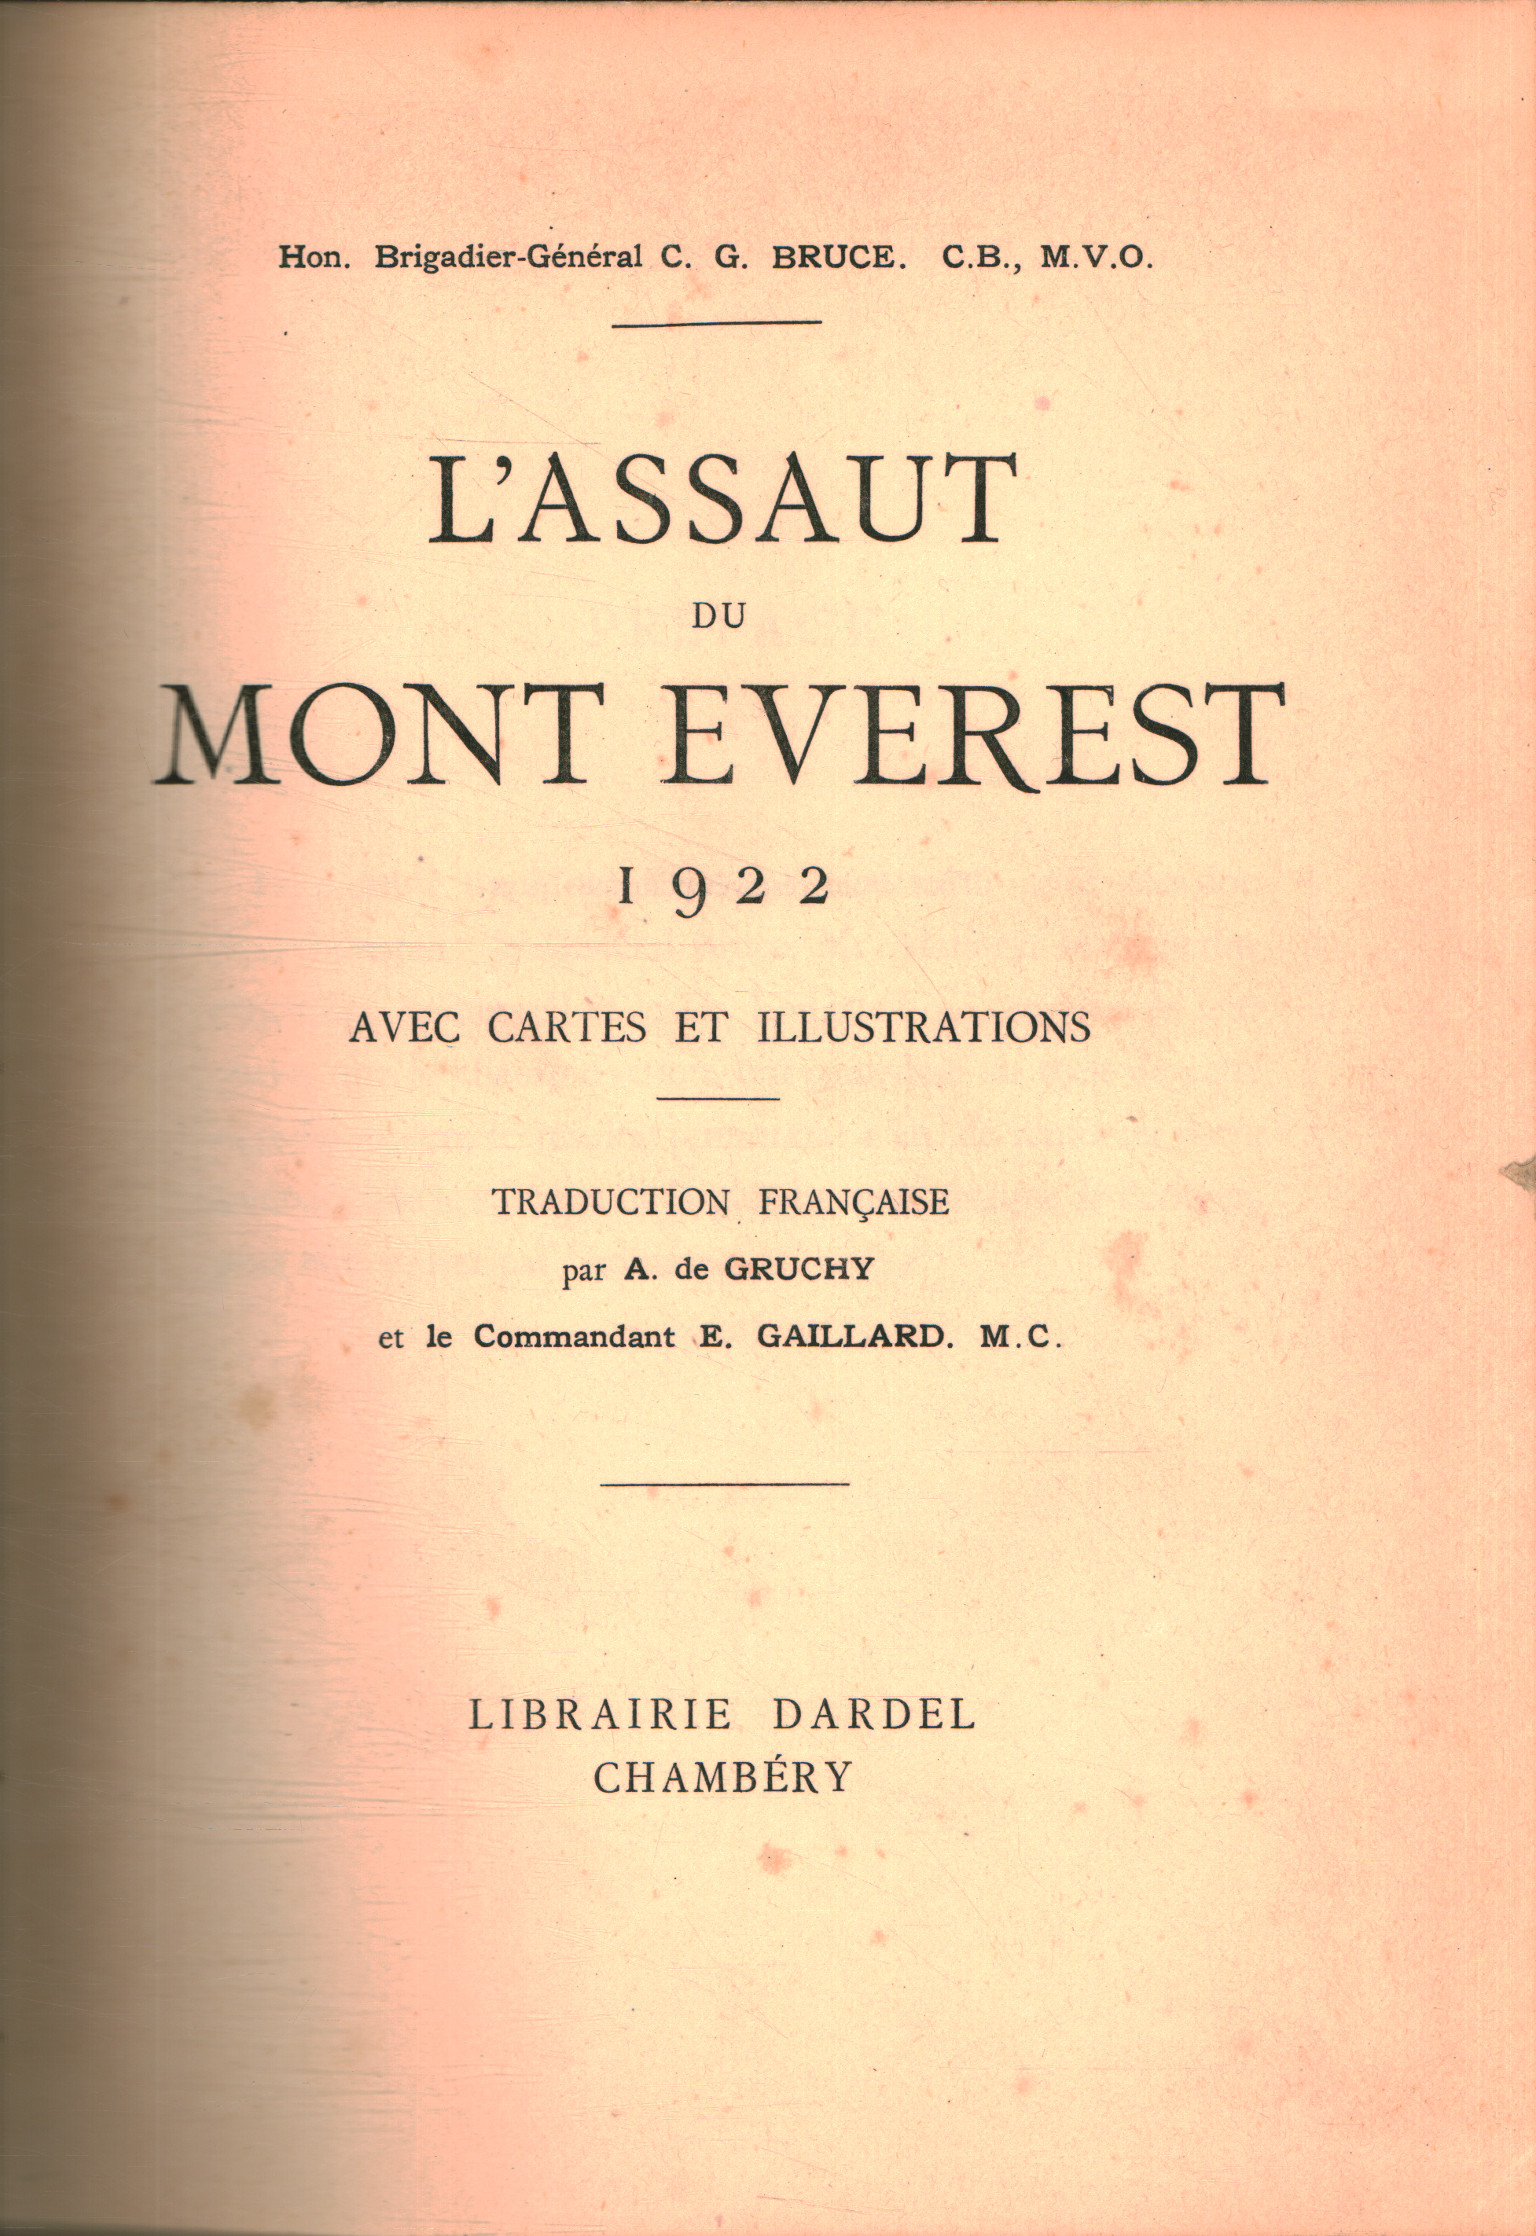 Assaut du Mont Everest 1922